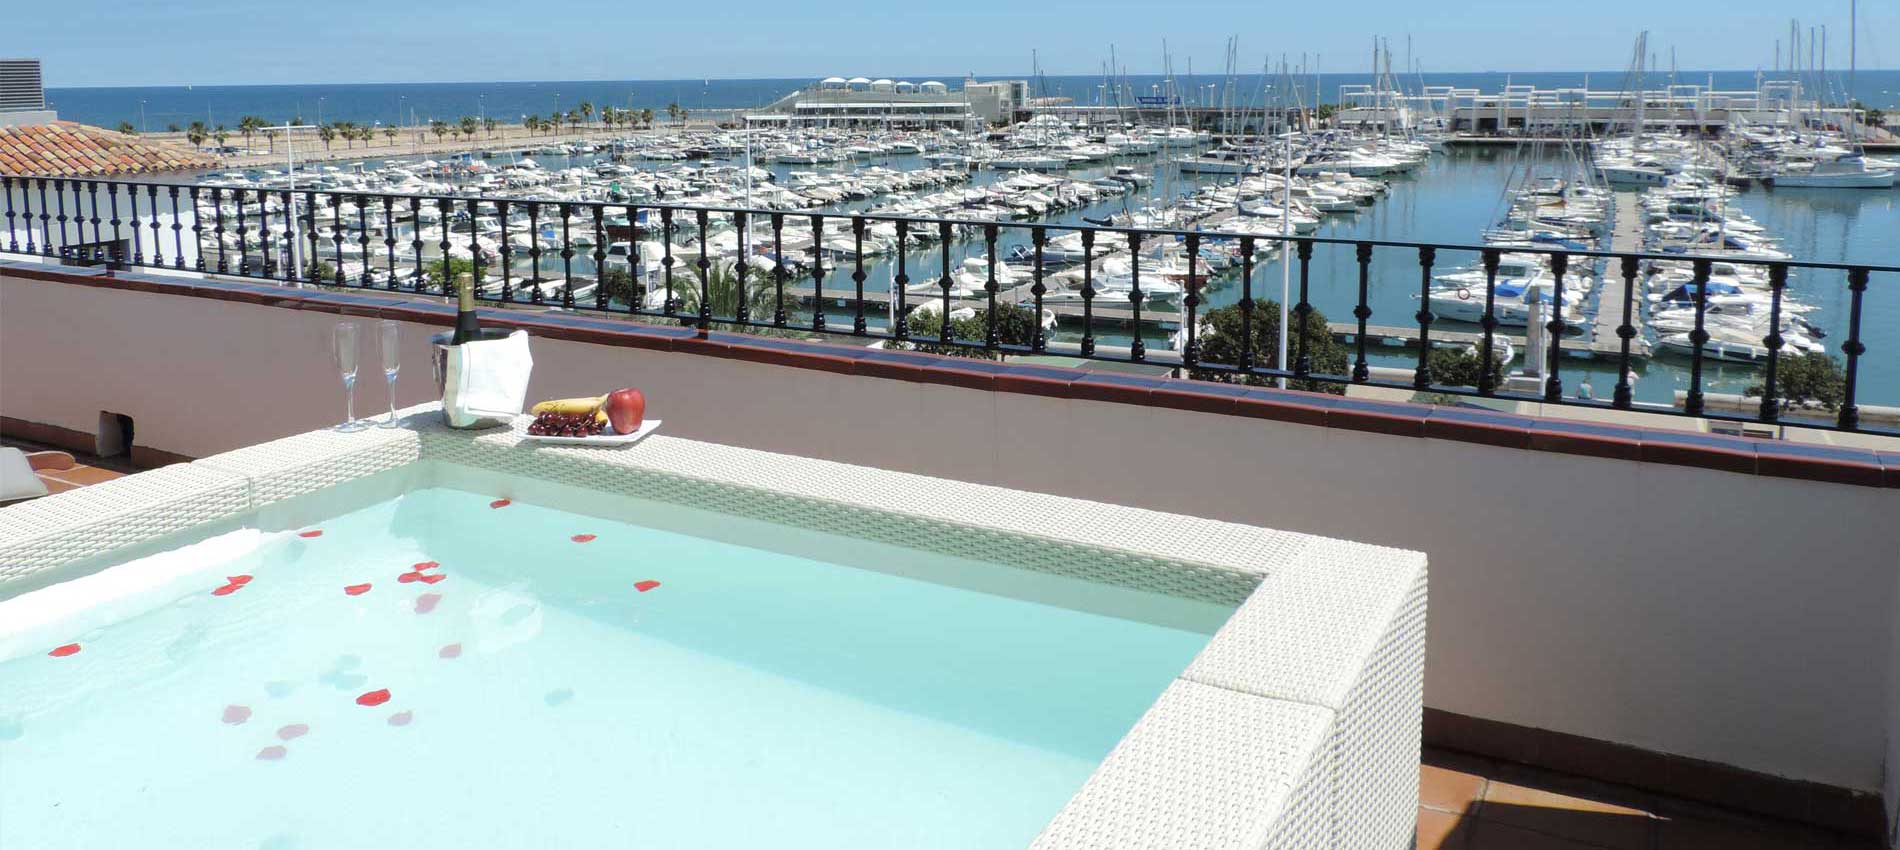 Piscina terraza - Hotel en denia La Posada del Mar